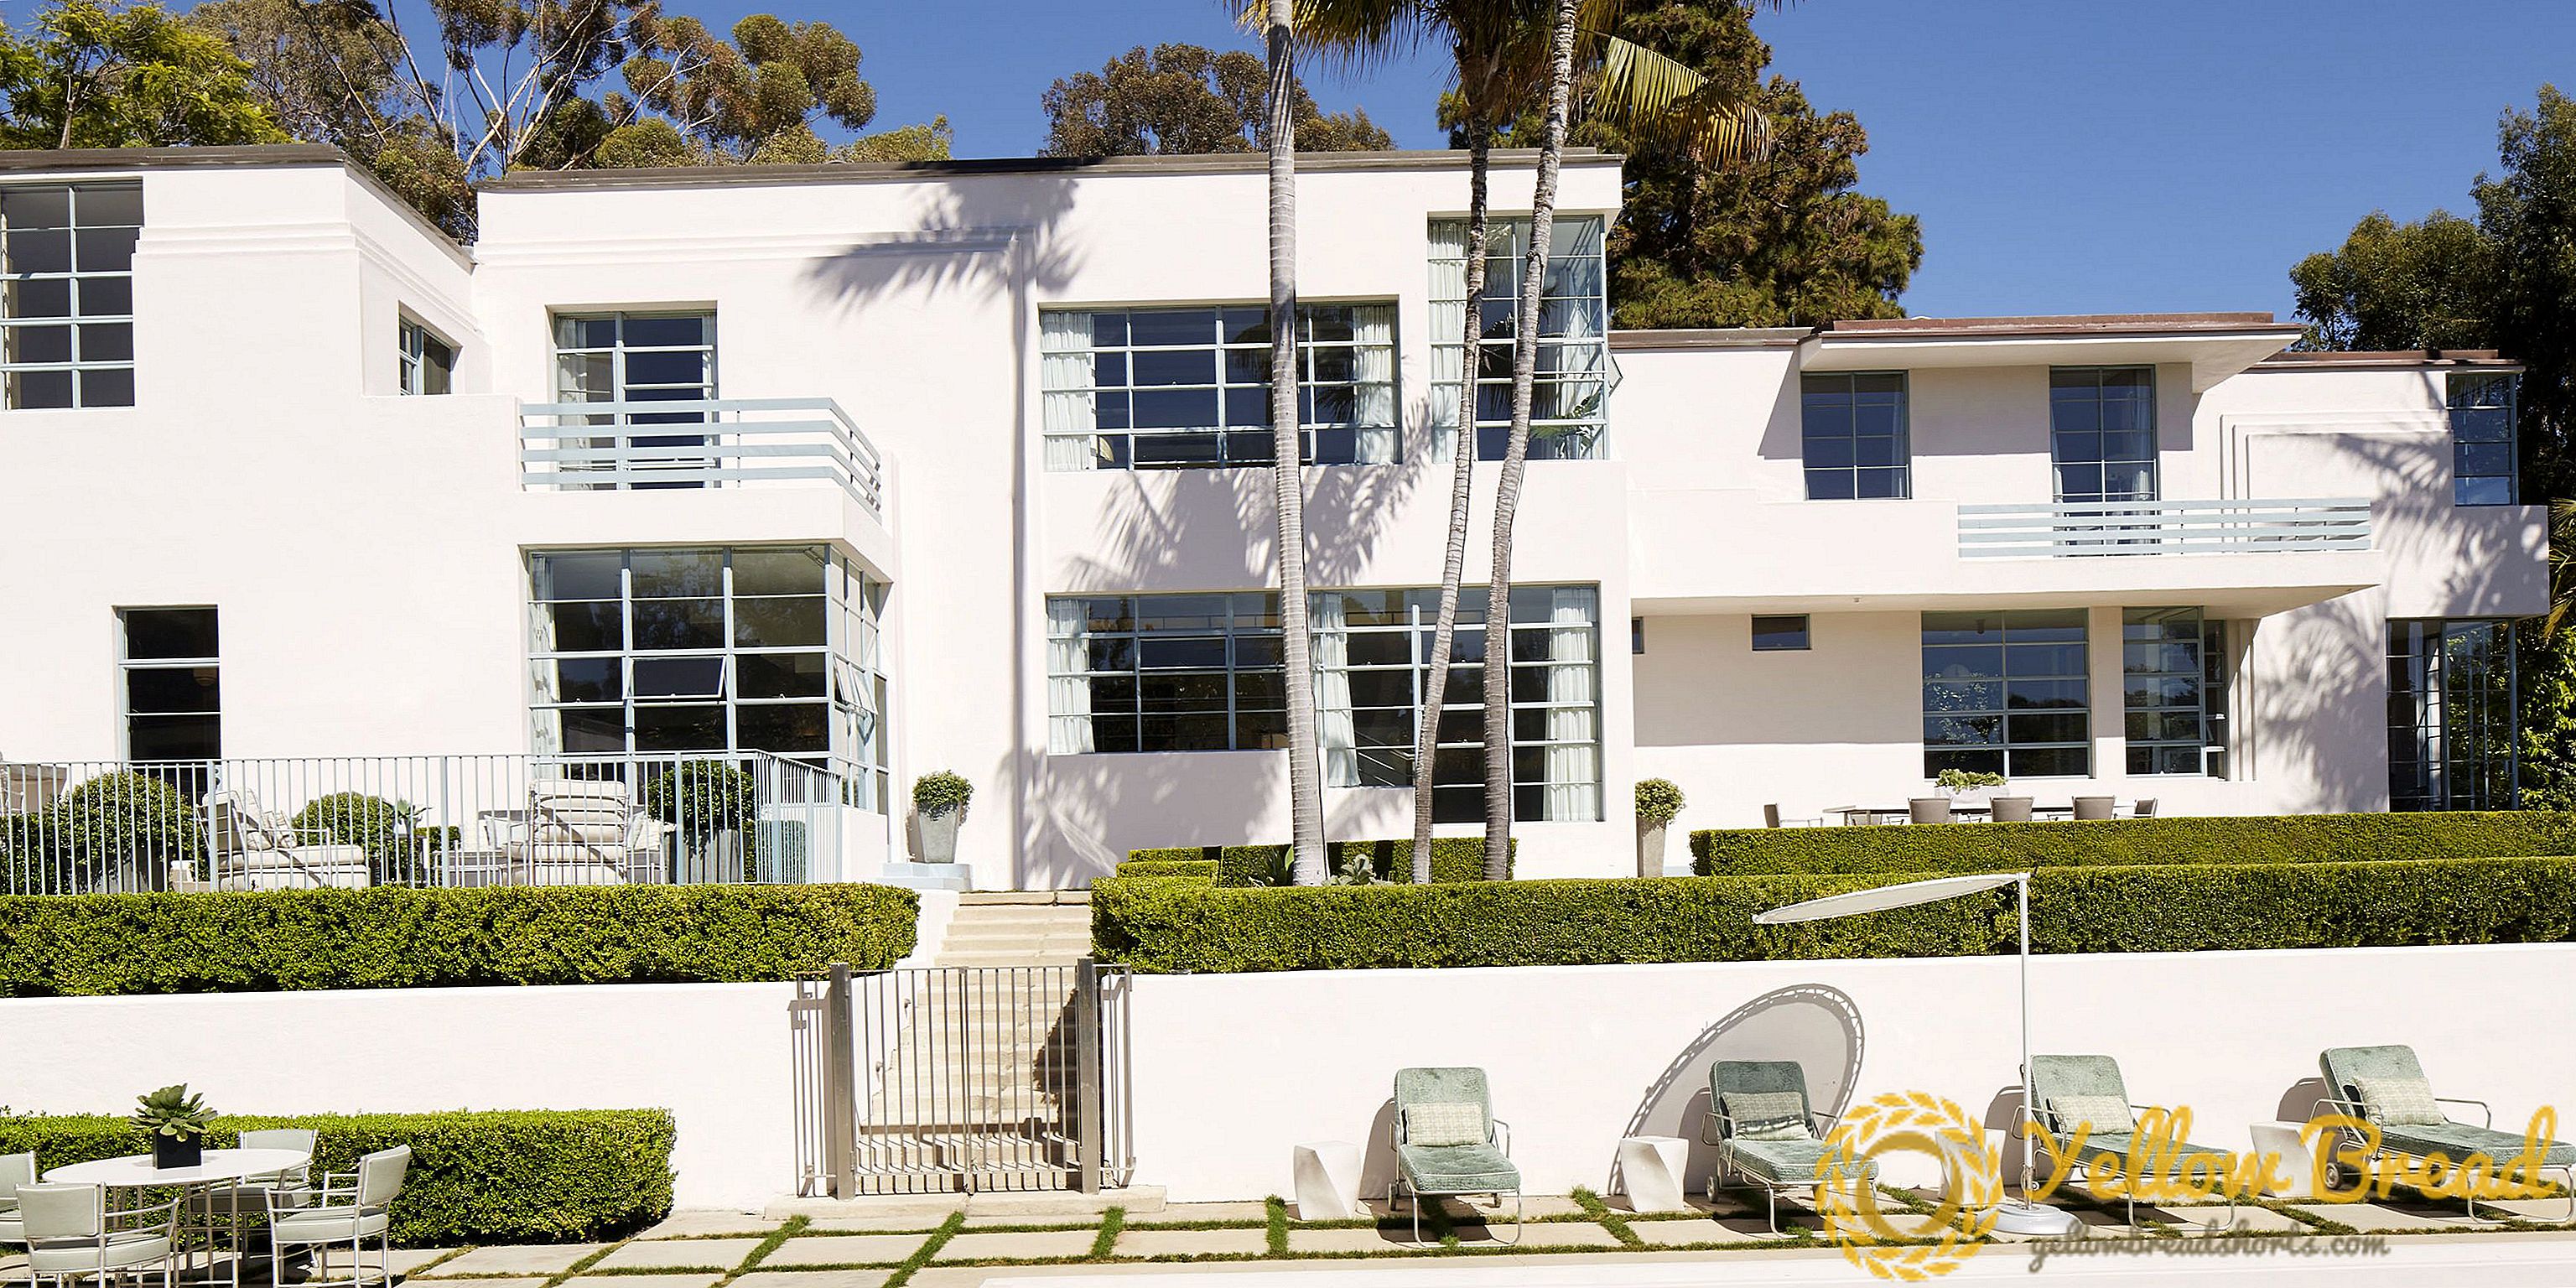 HOUSE TOUR: Ένα σπίτι Art Deco που τιμά την παλαιά κληρονομιά του στο Χόλιγουντ